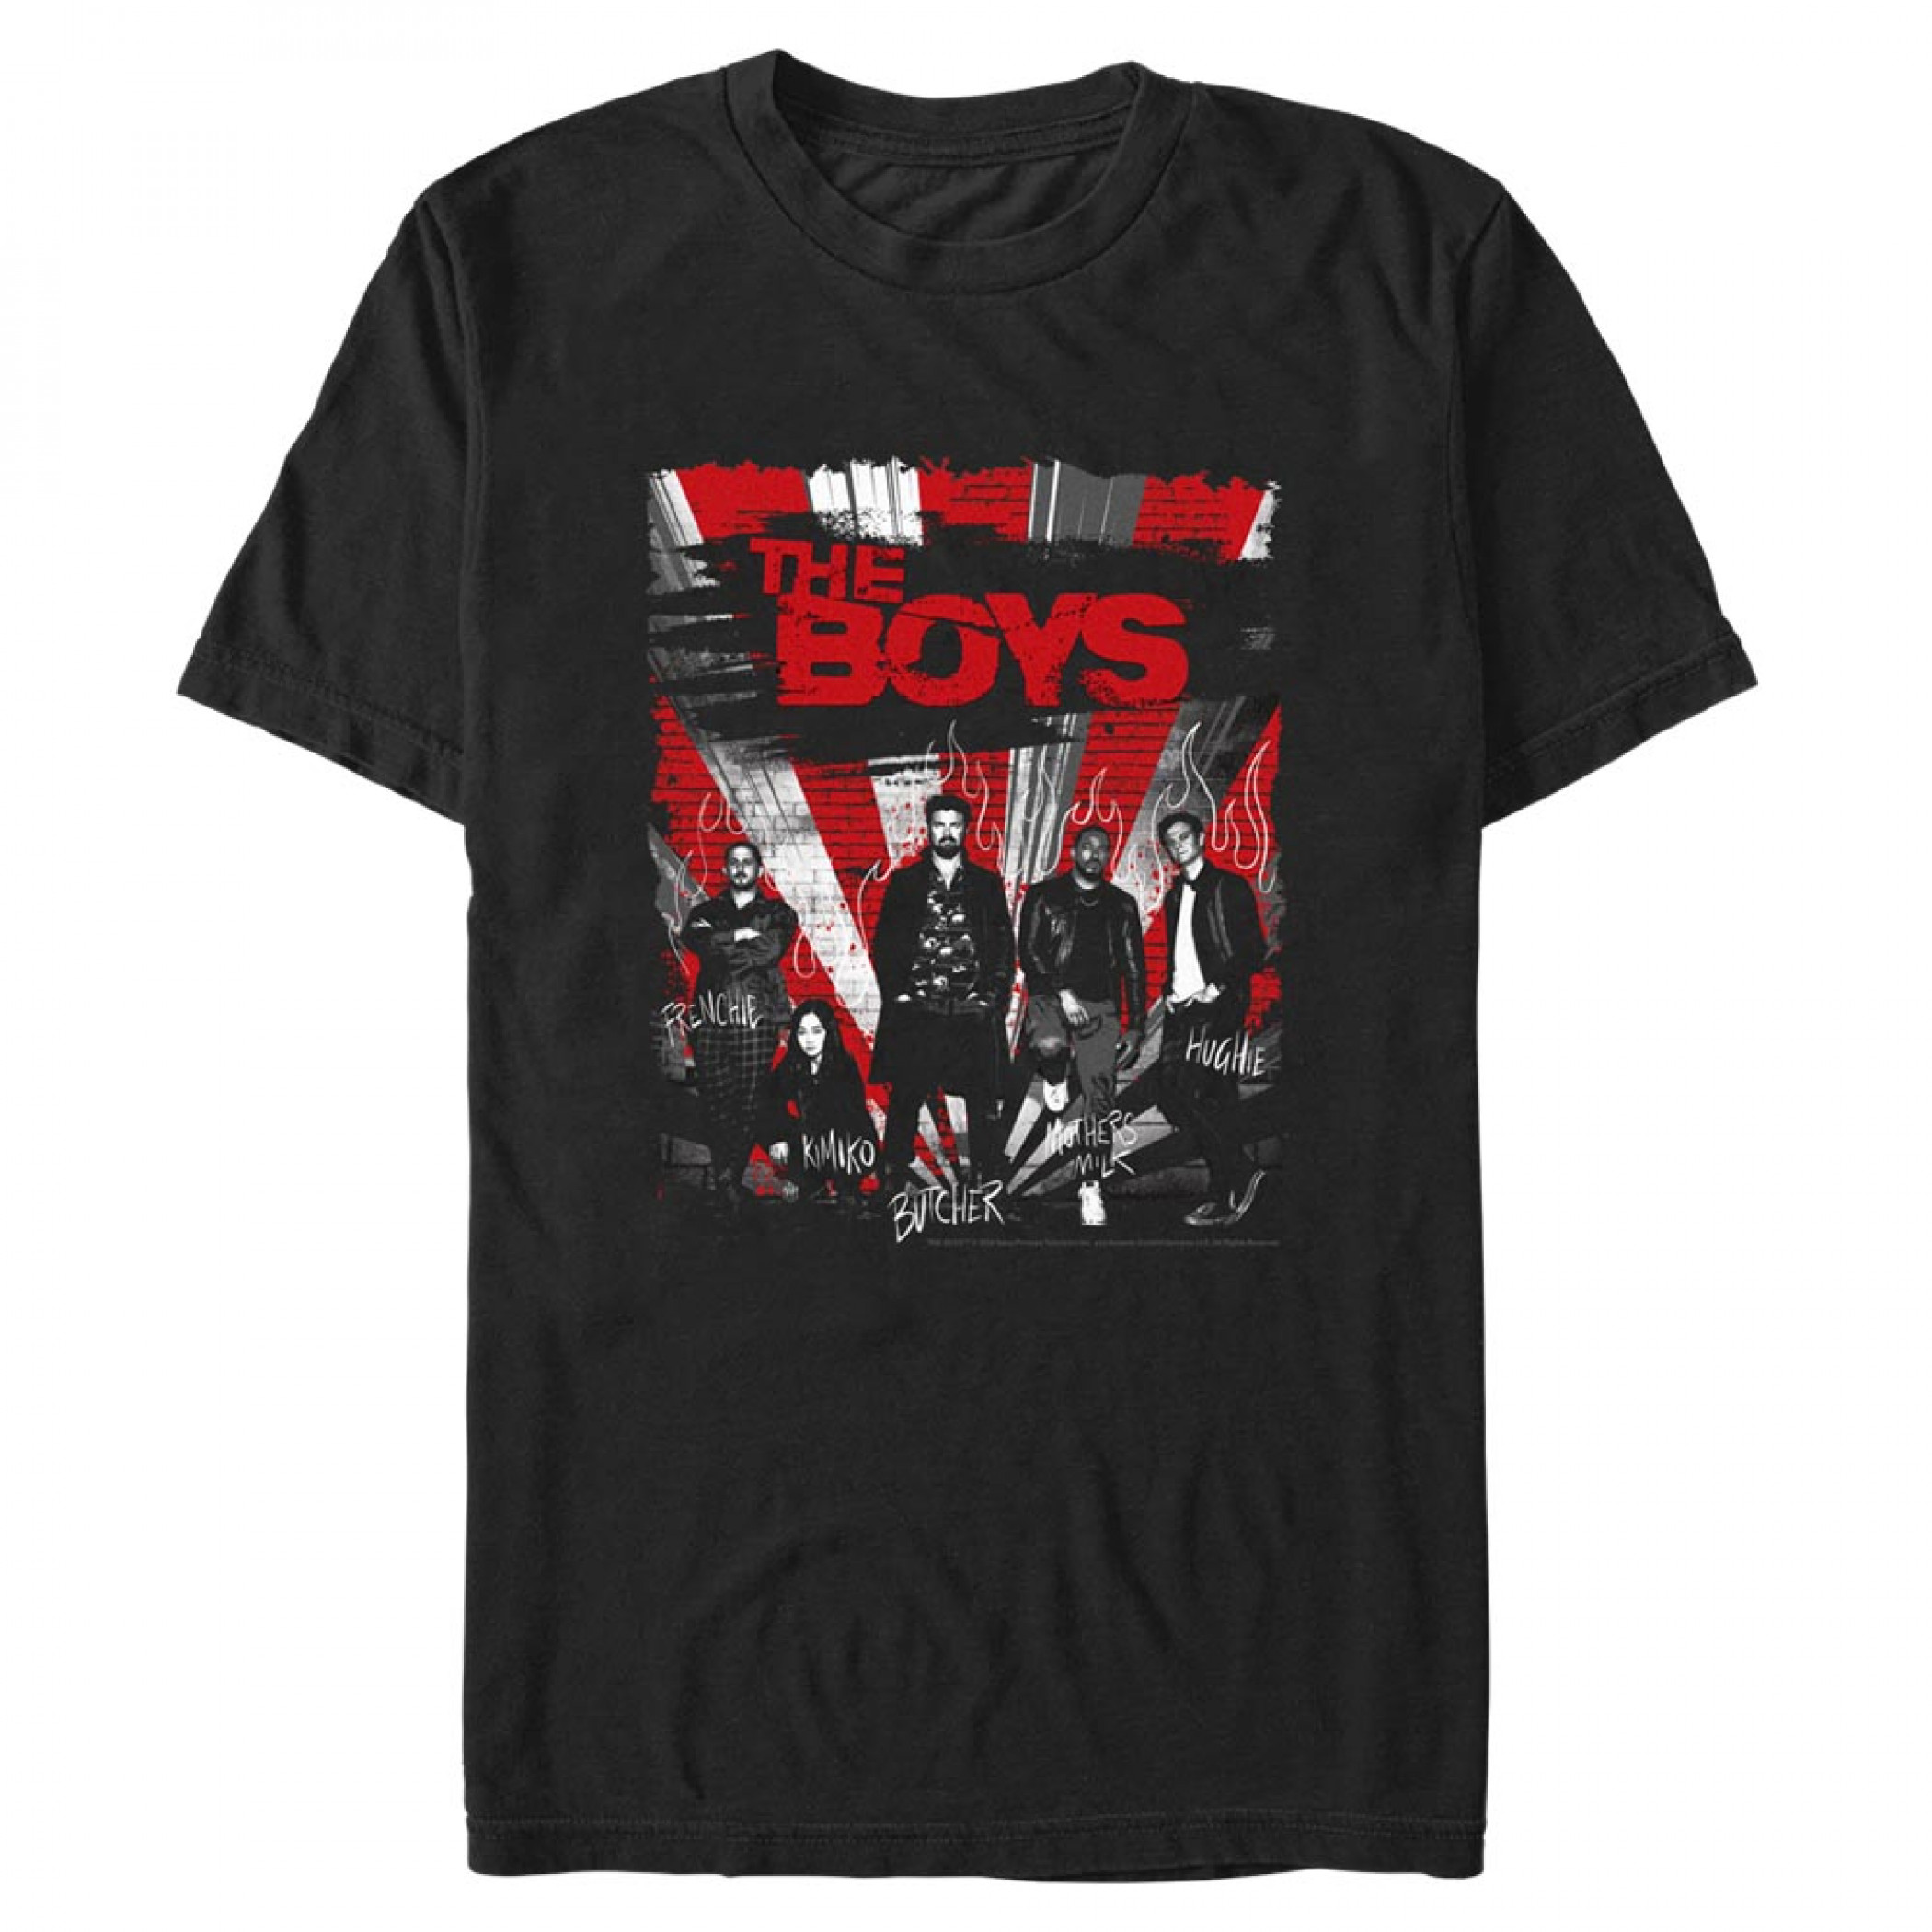 The Boys Grunge Group T-Shirt